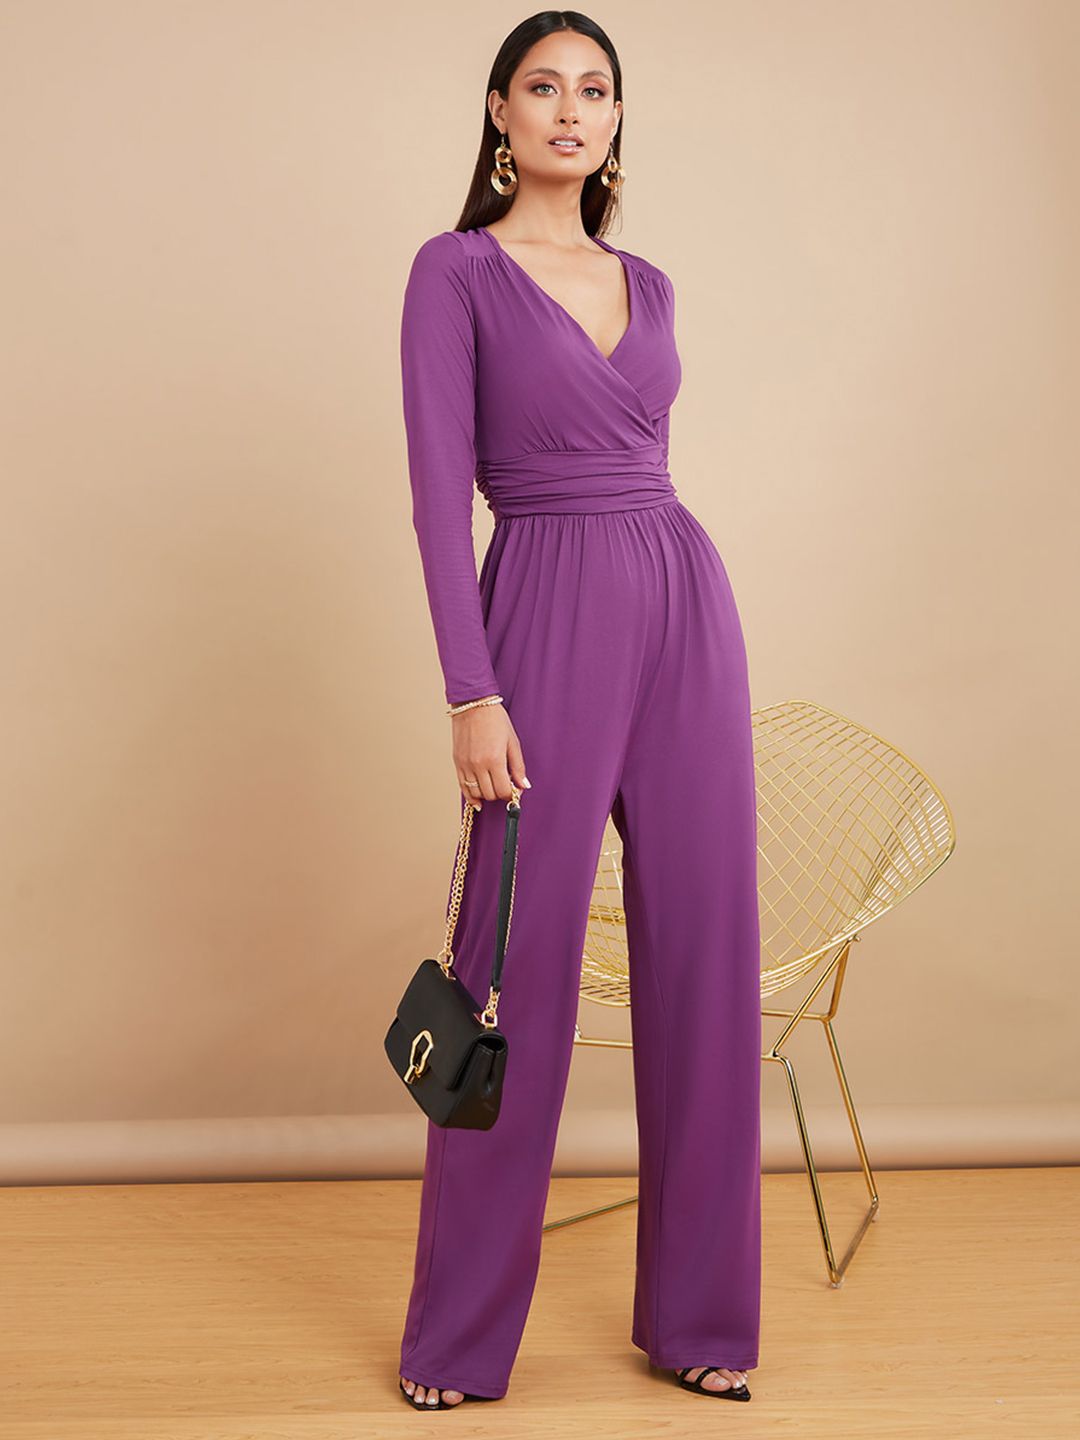 Styli Purple Basic Jumpsuit Price in India